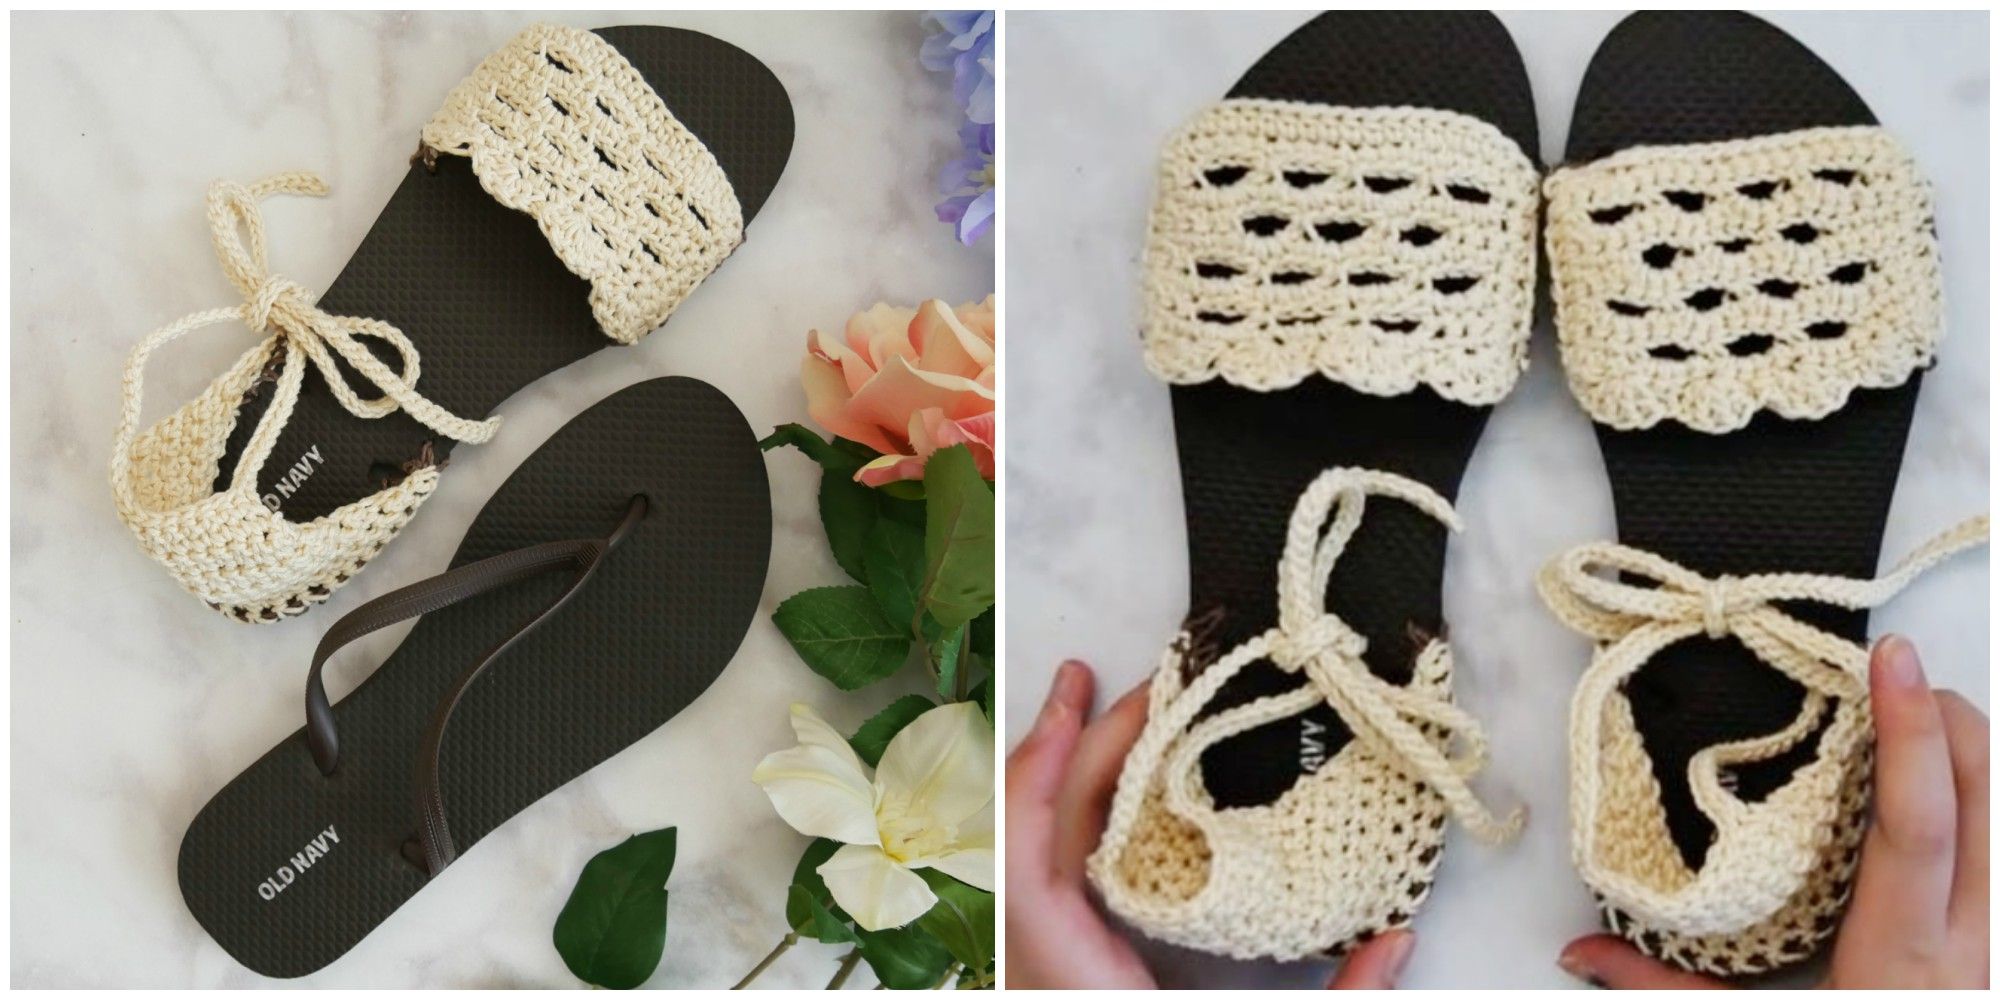 How to Knit Crochet Using Flip Flops - Crochet Sandals